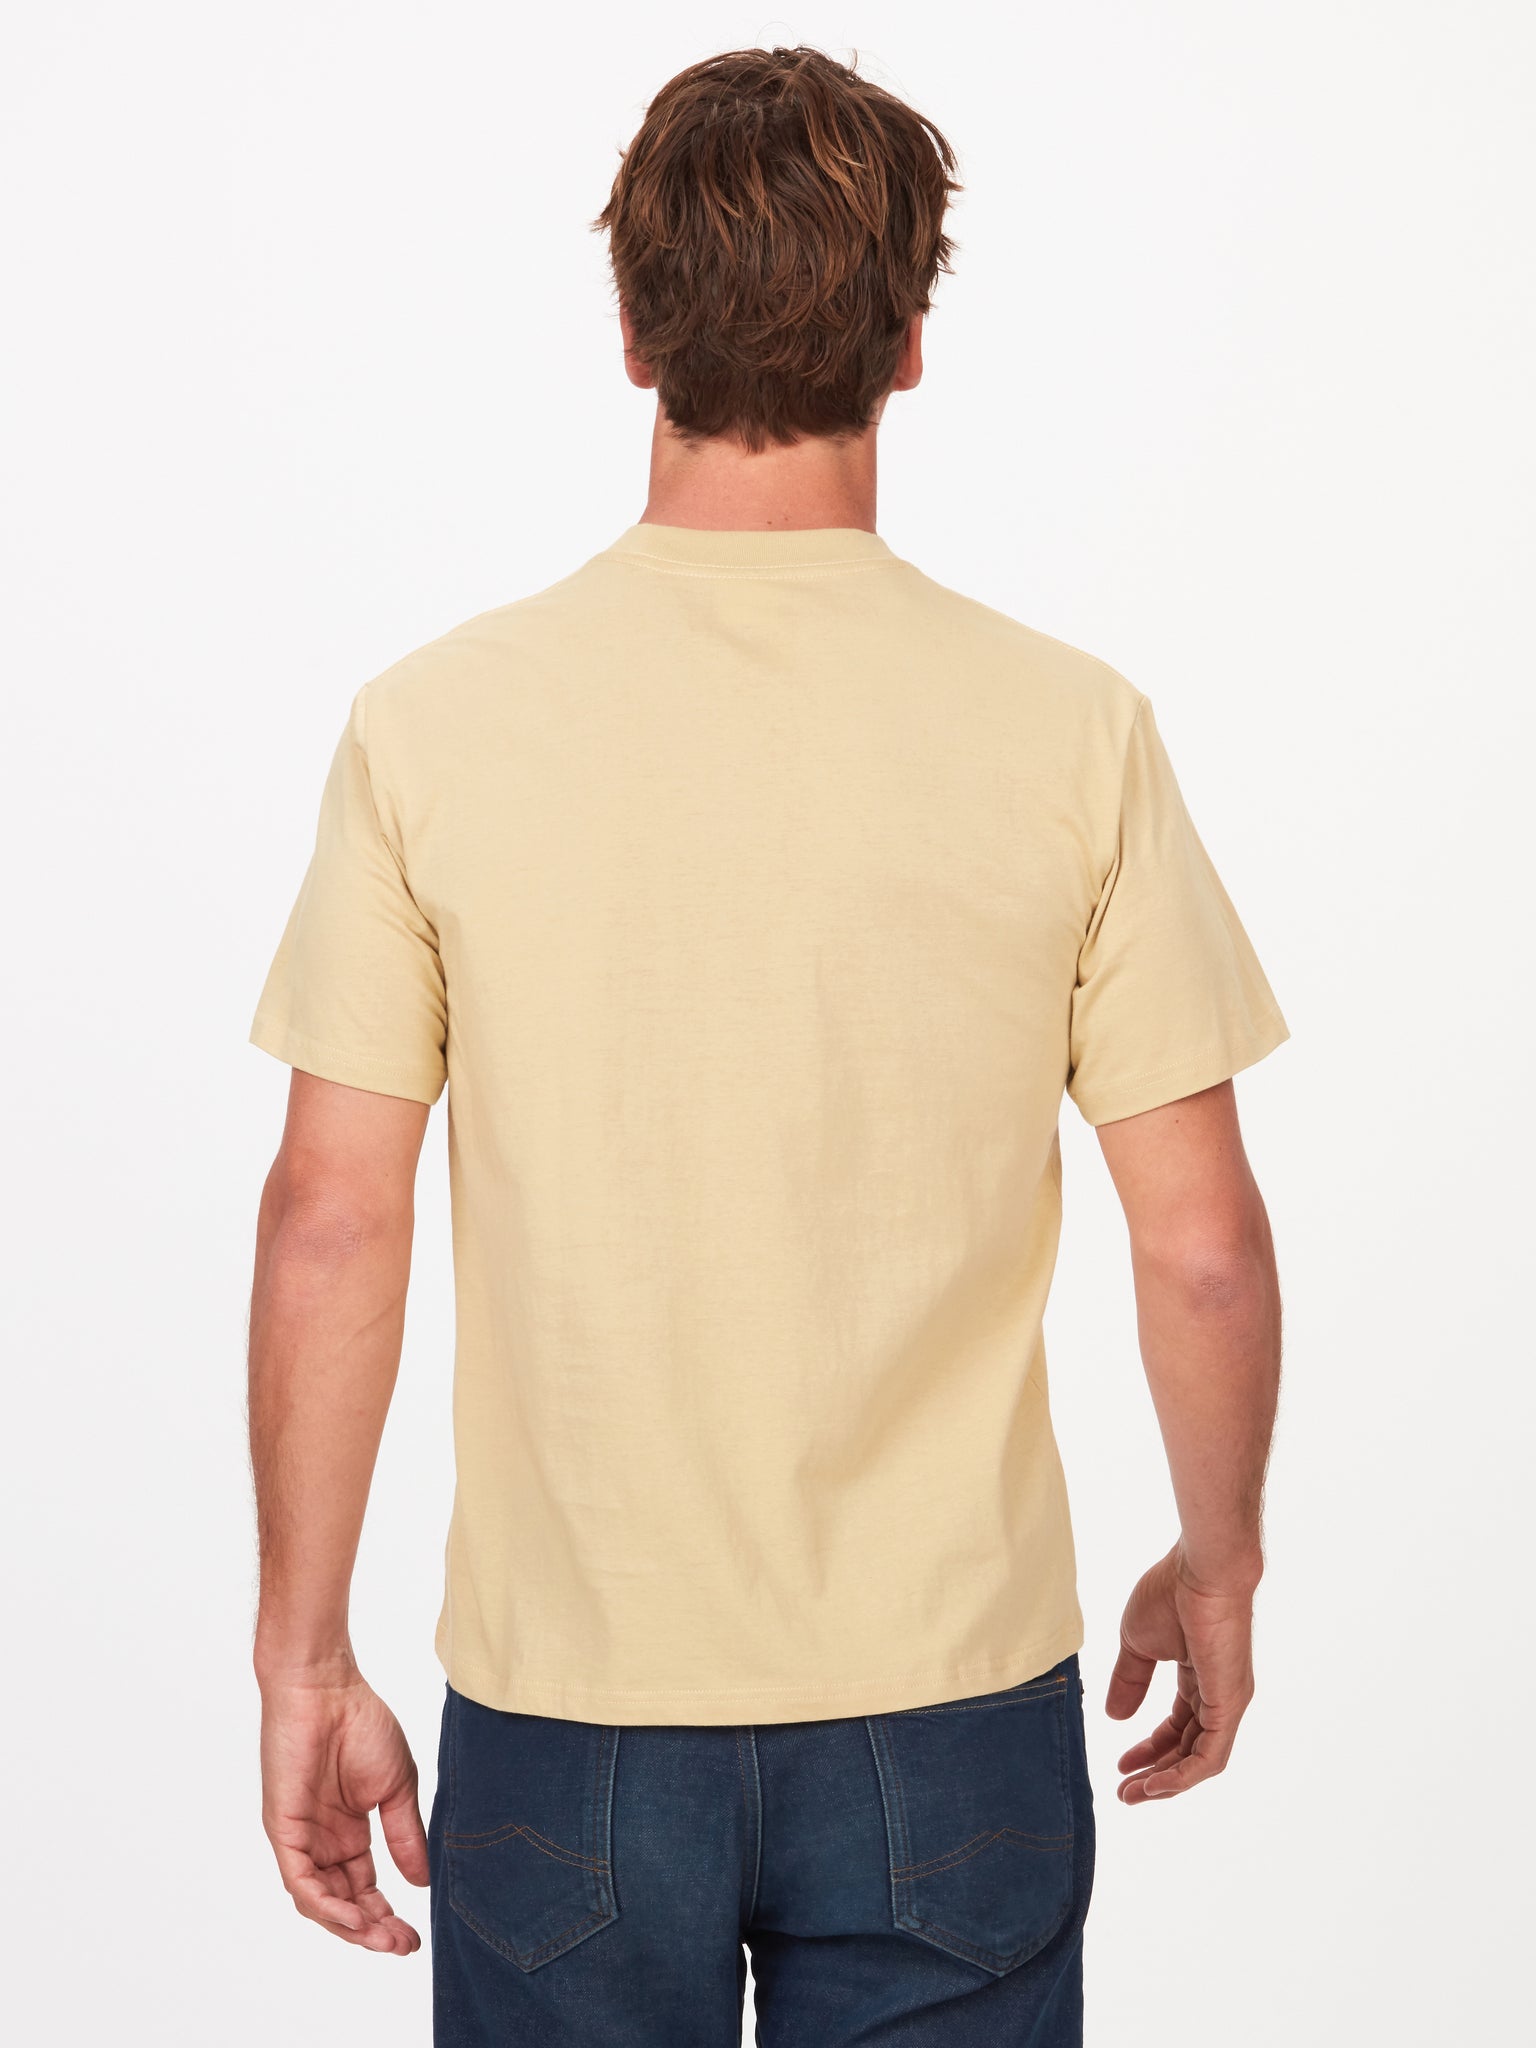 Marmot Mountain Works Gradient Short-Sleeve T-Shirt